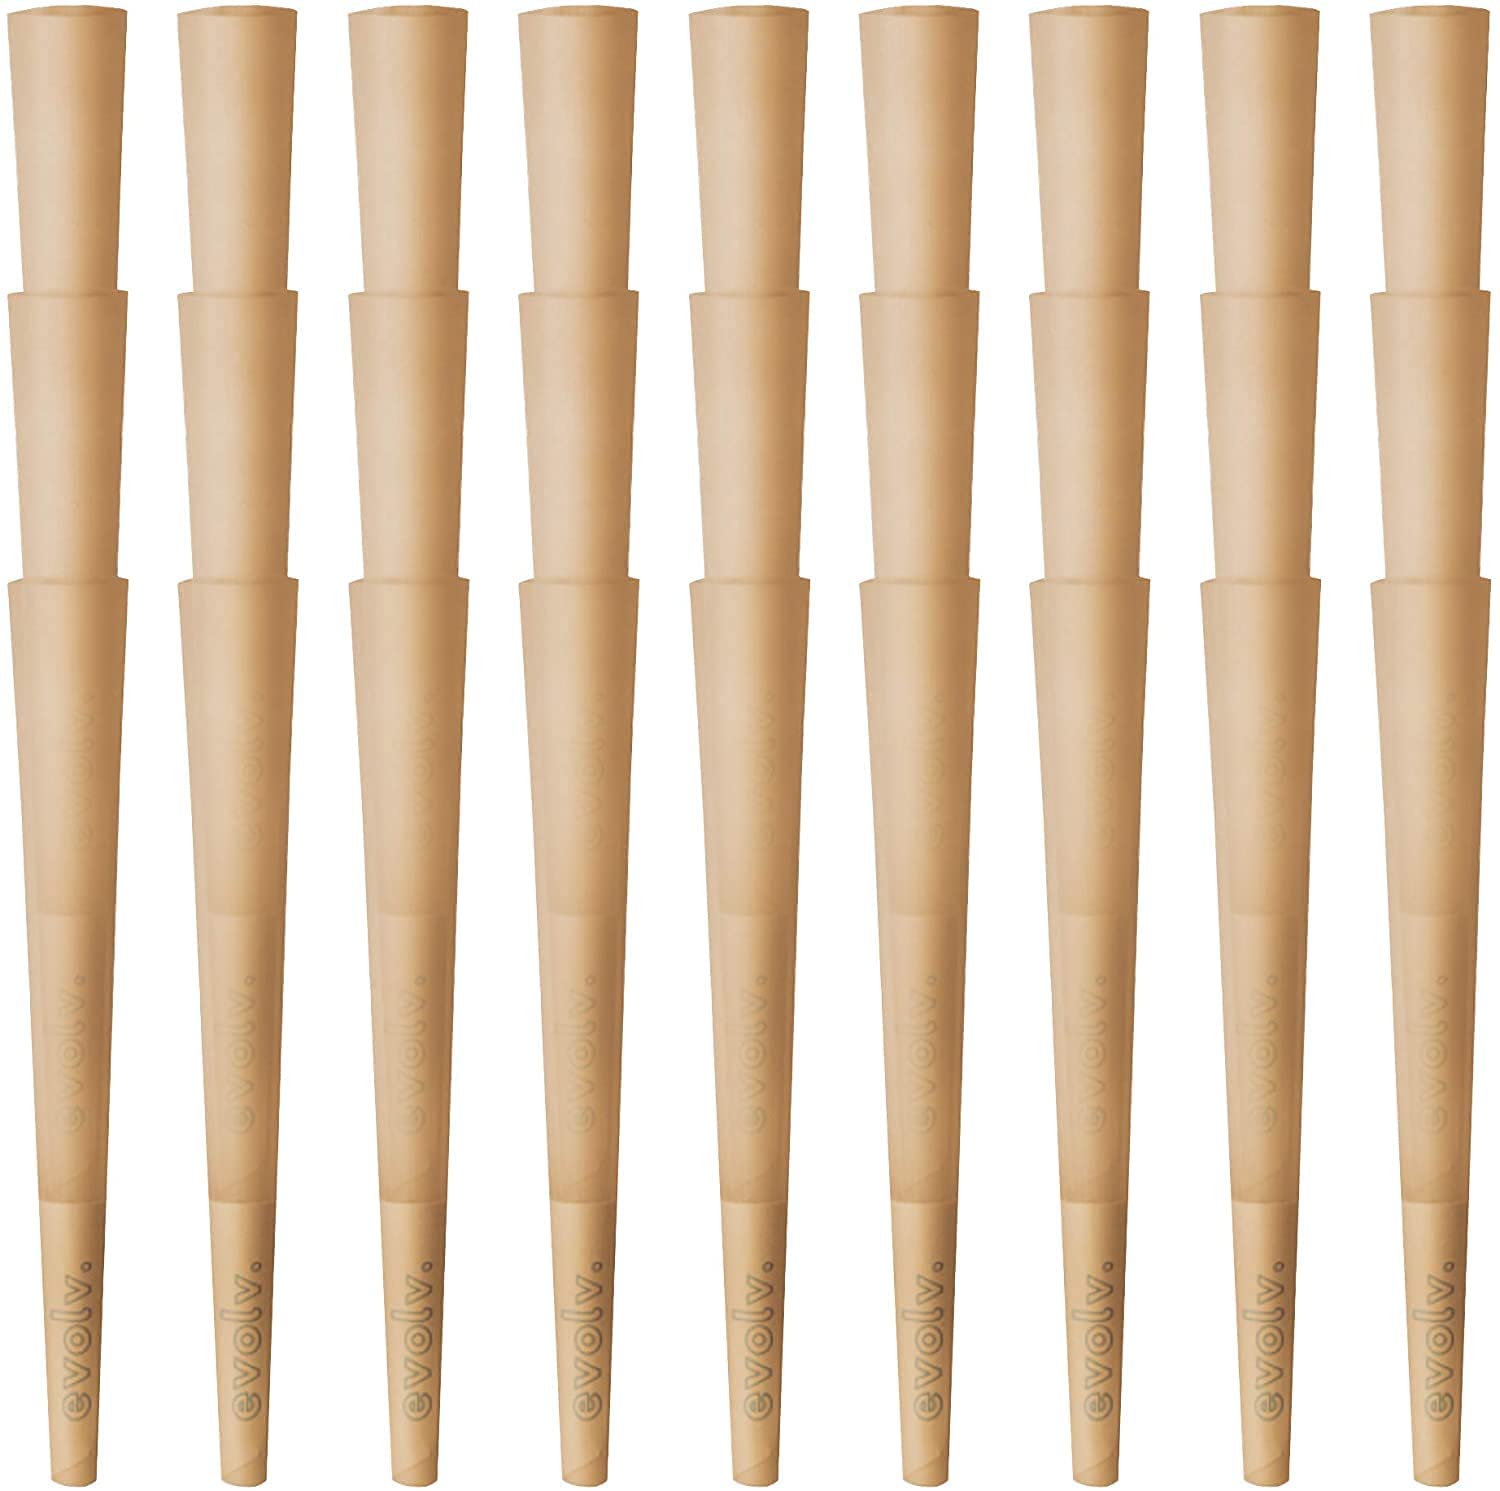 EVOLV Organic Hemp Pre-Rolled Cones | Size: M98 (98mm) | 100/Pack